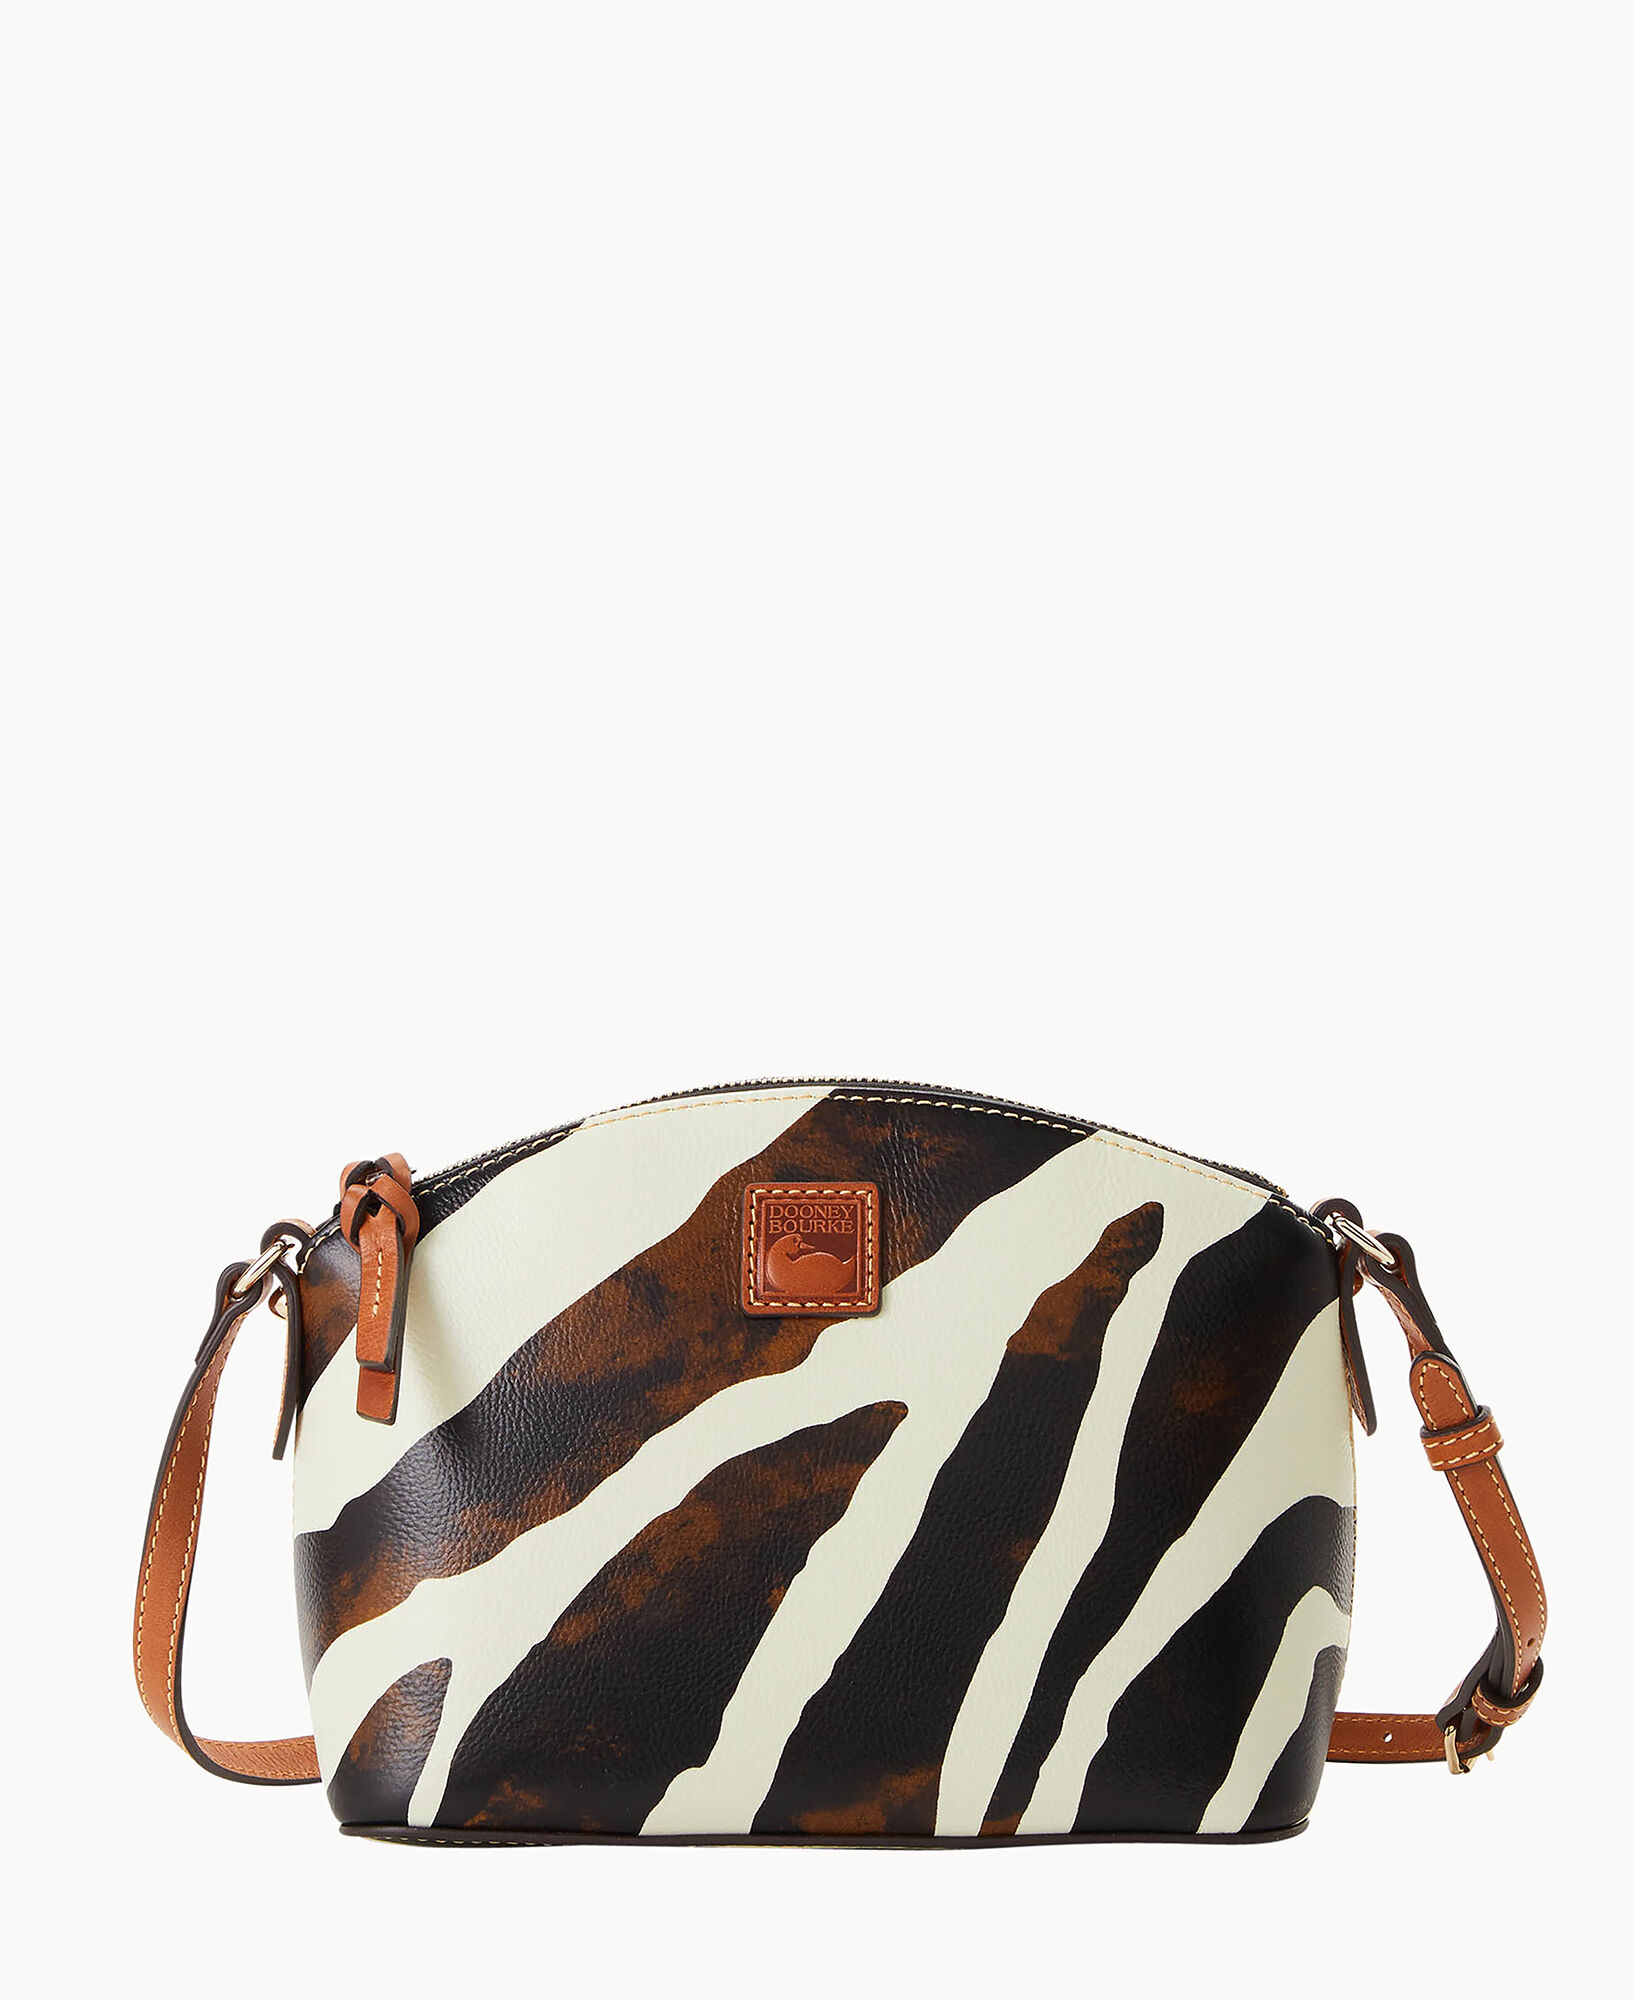 Dooney Bourke Zebra Printed Domed Satchel Bag